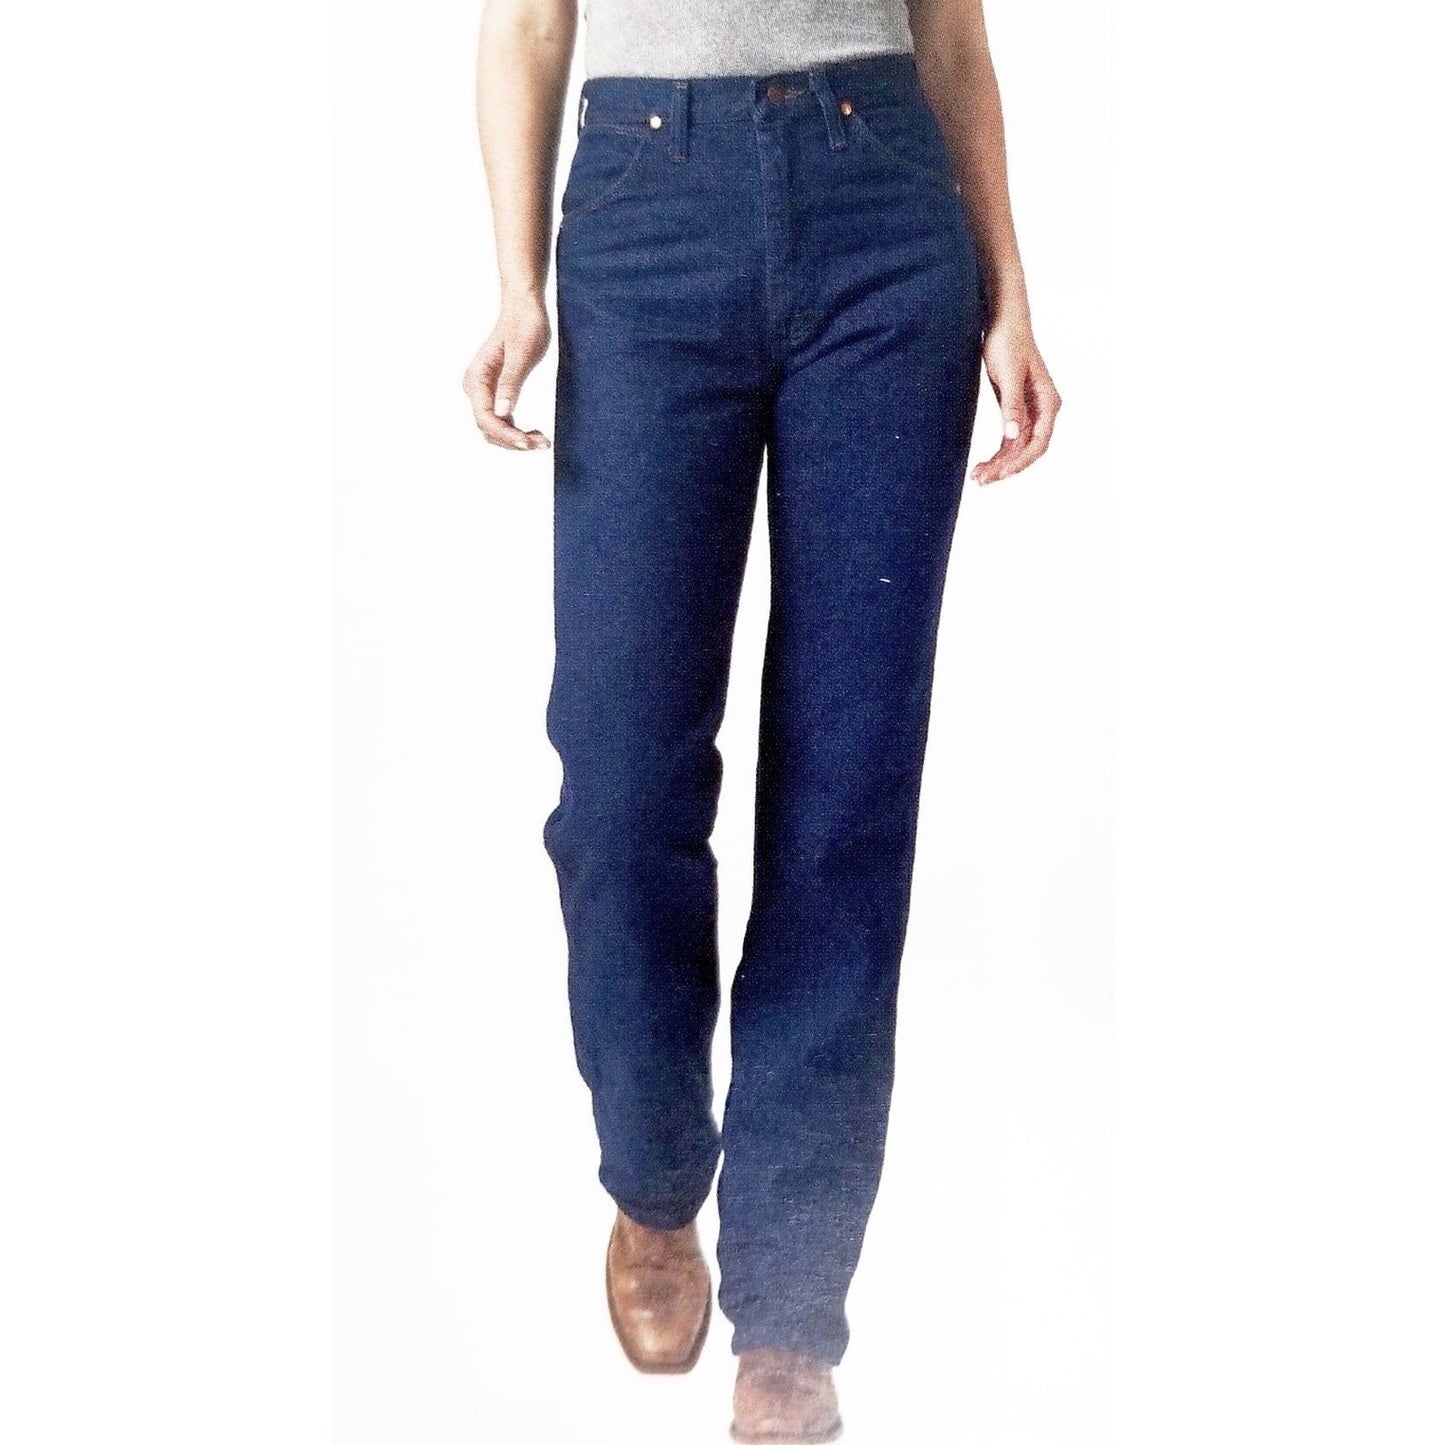 Wrangler Women's Jeans Slim Fit Pre-Wash14MWZGed Heavy Denim - Wrangler